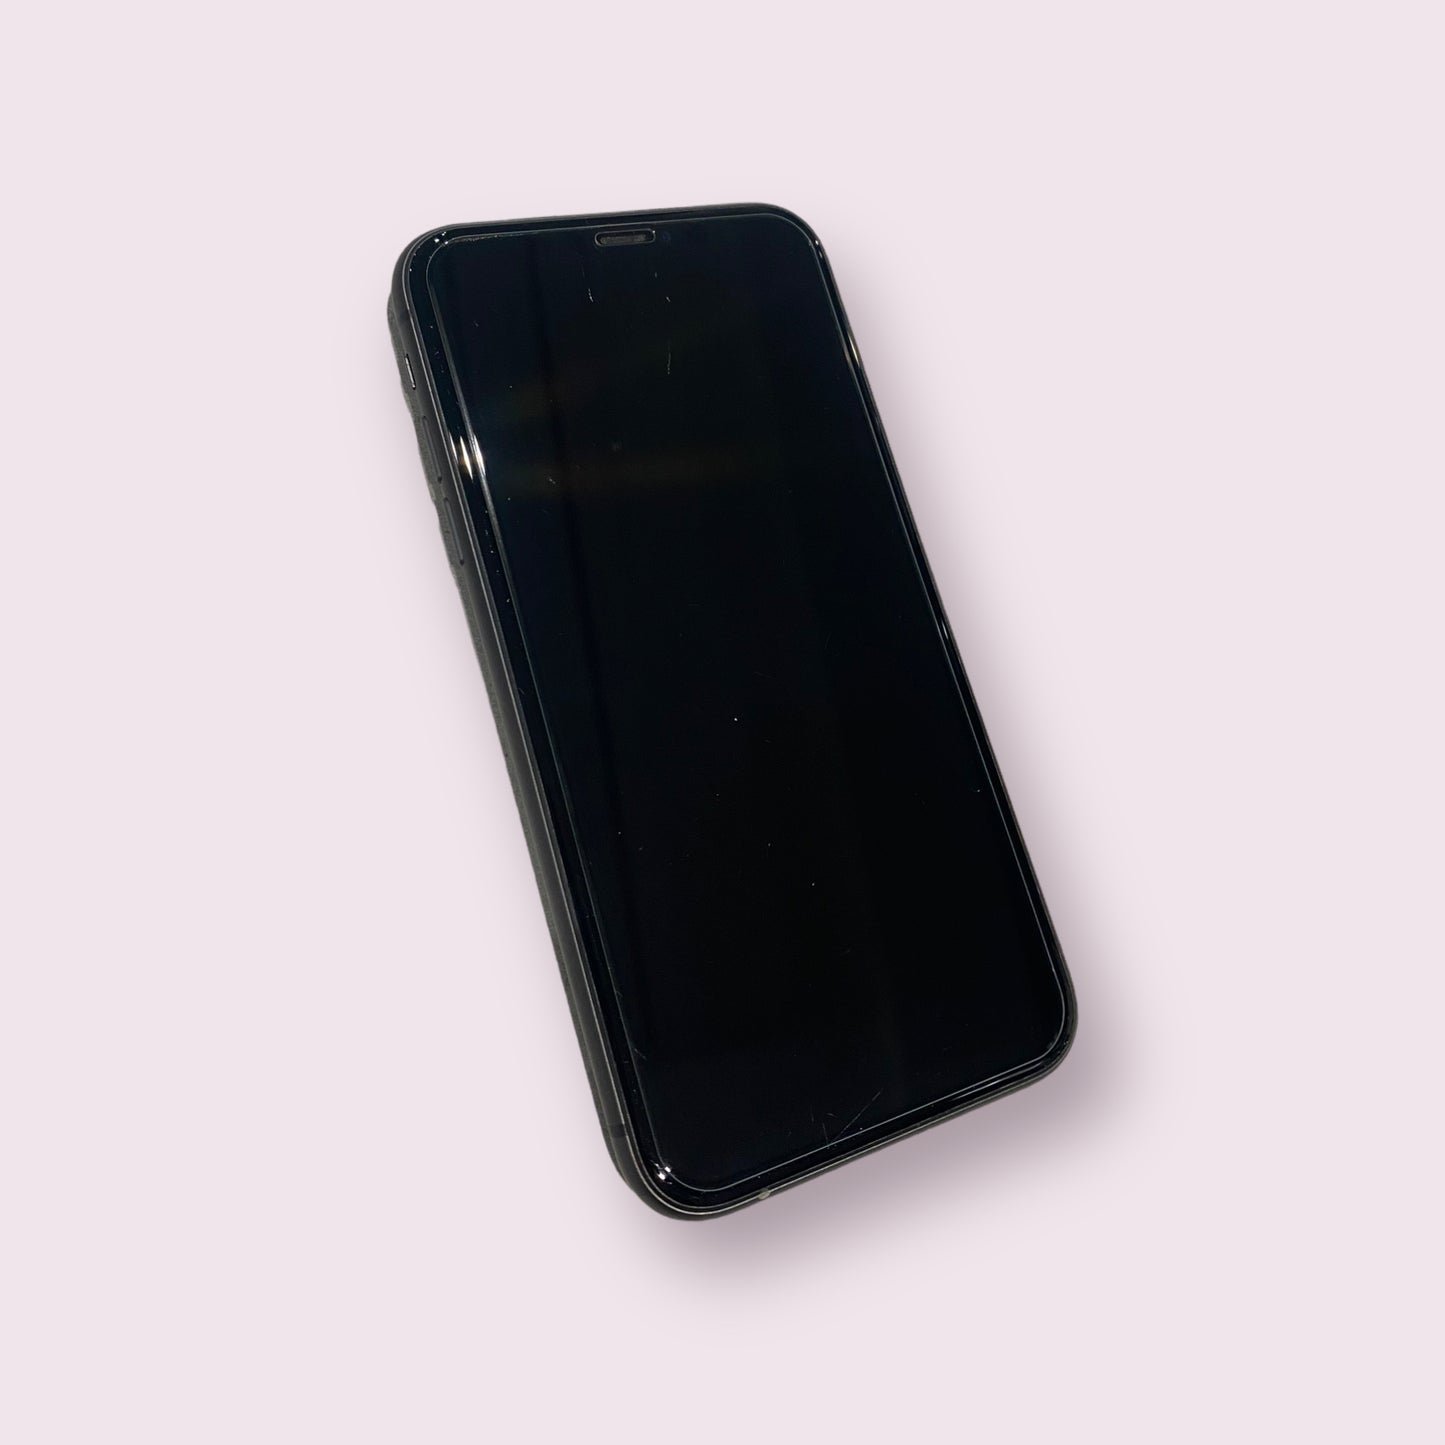 Apple iPhone 11 128GB Black Smartphone - Unlocked - Grade A - BH 100%